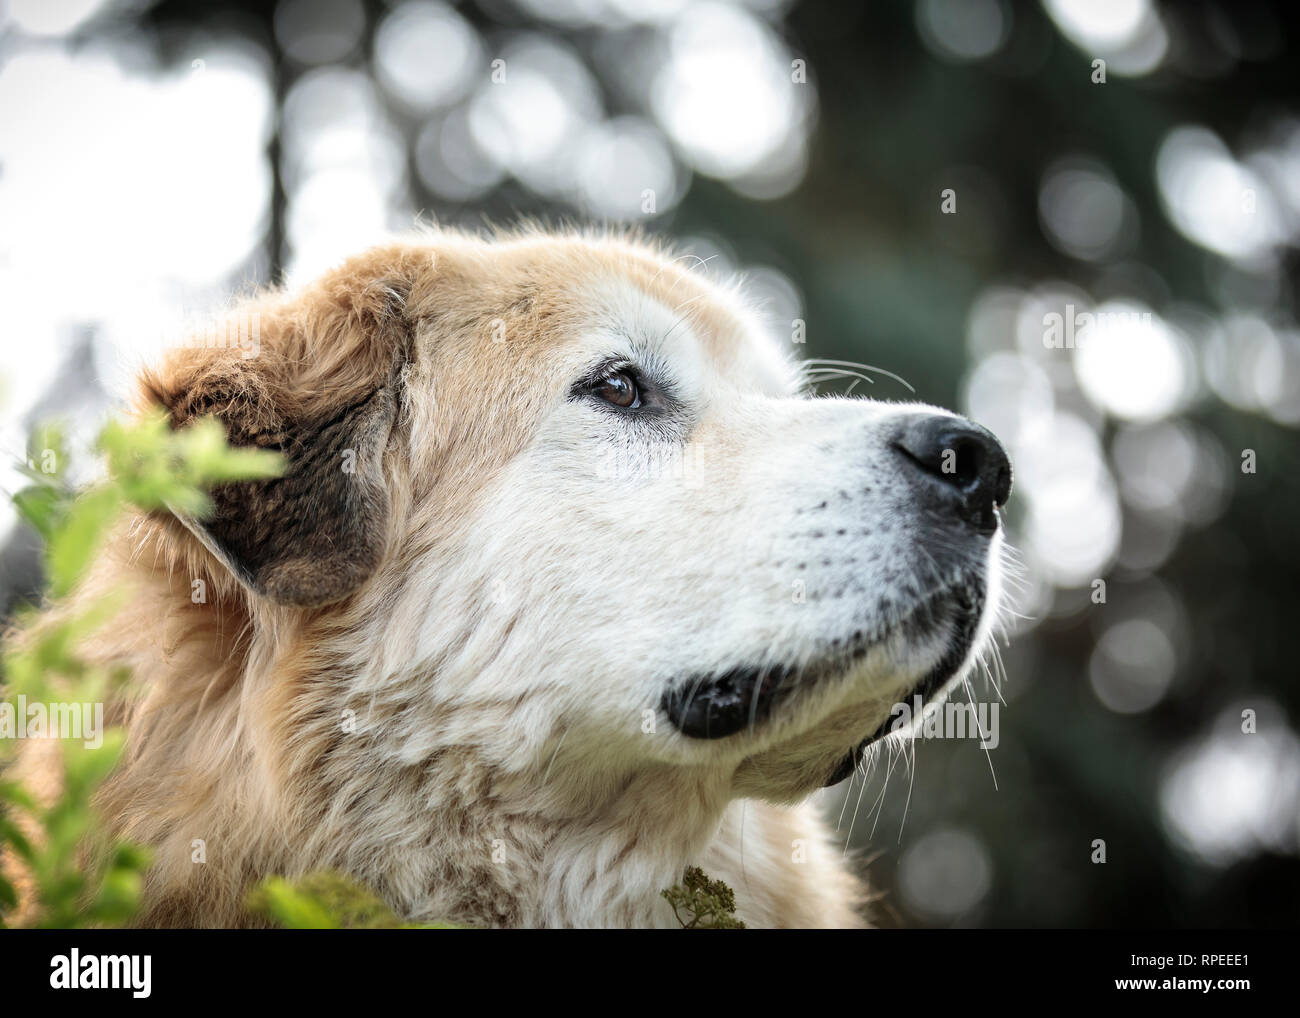 Dog face, close up, Manitoba, Canada. Stock Photo